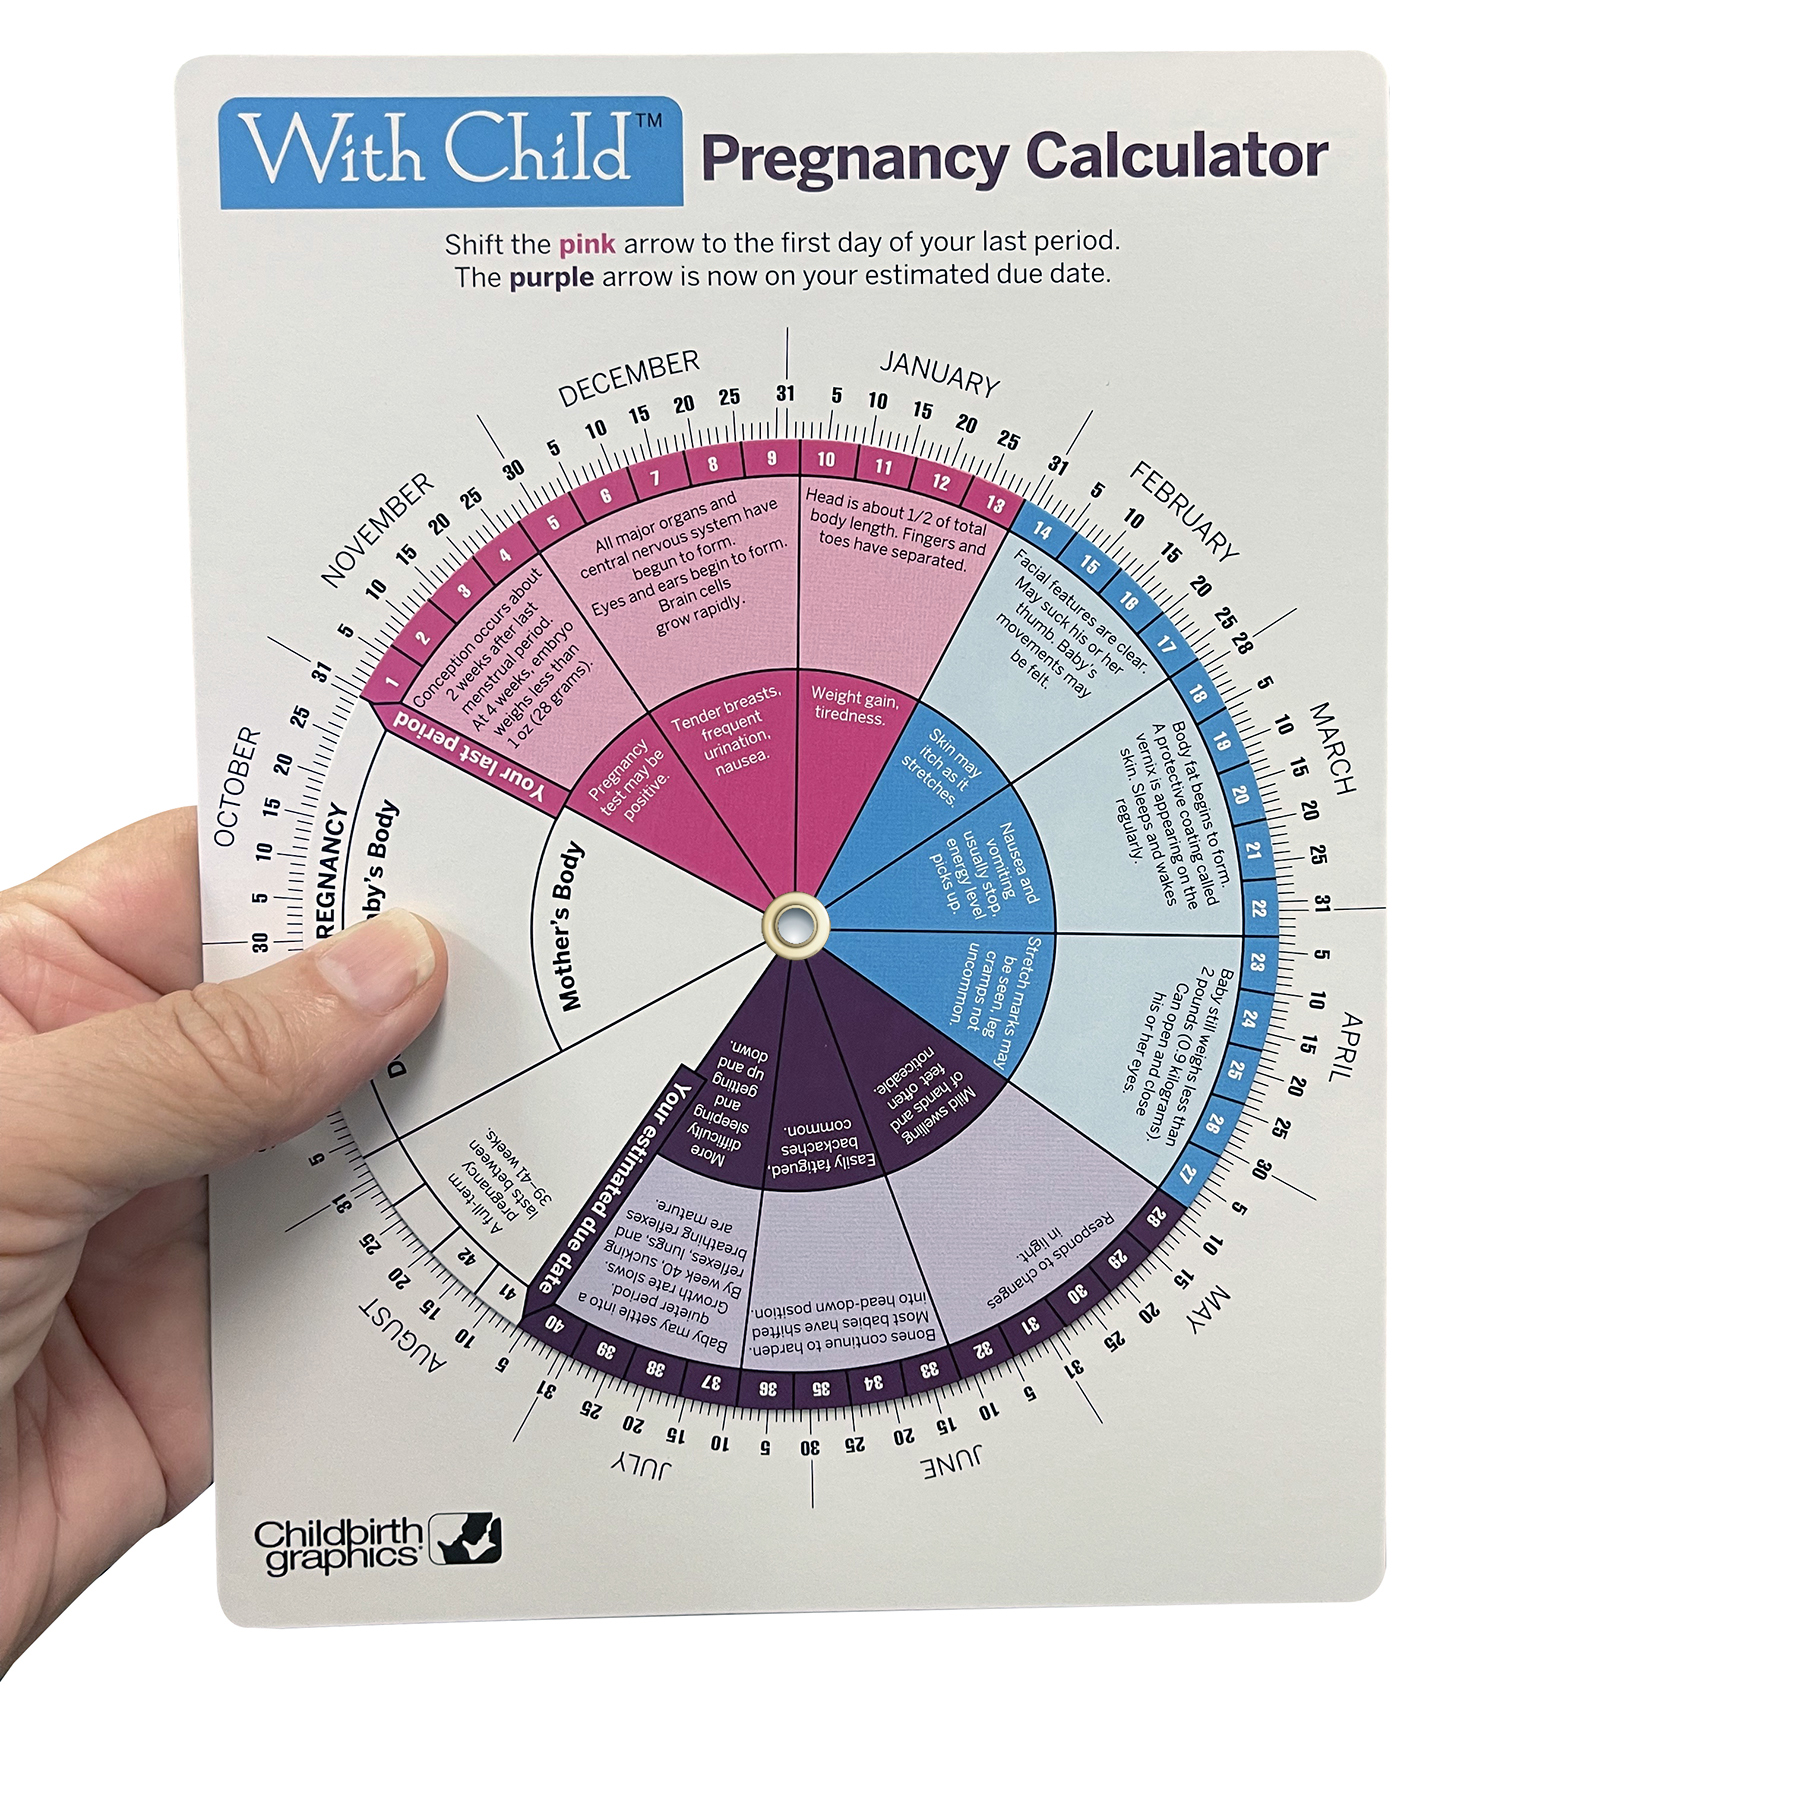 Matron Criticism Upset With Child Pregnancy Calculator | Childbirth Graphics